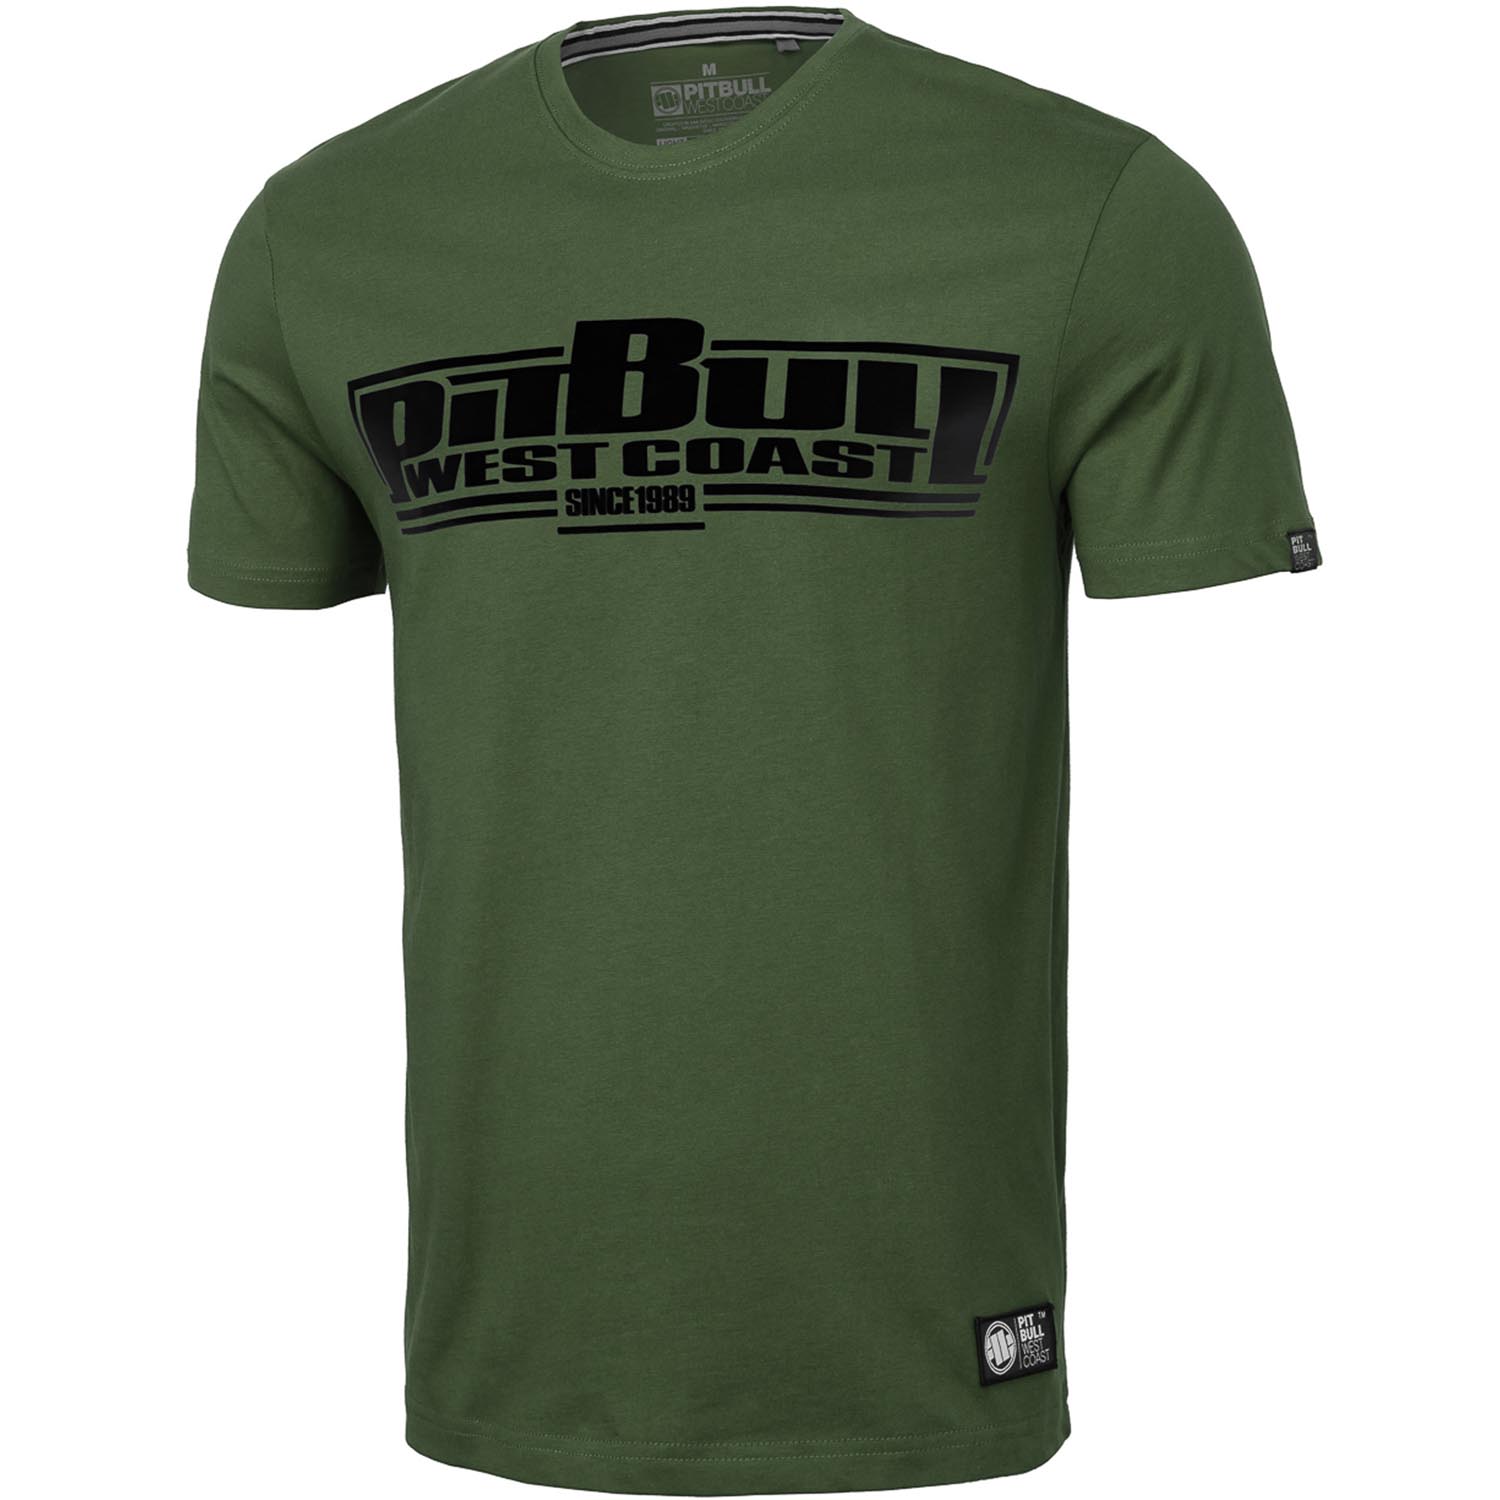 Pit Bull West Coast T-Shirt, Classic Boxing S22, olive